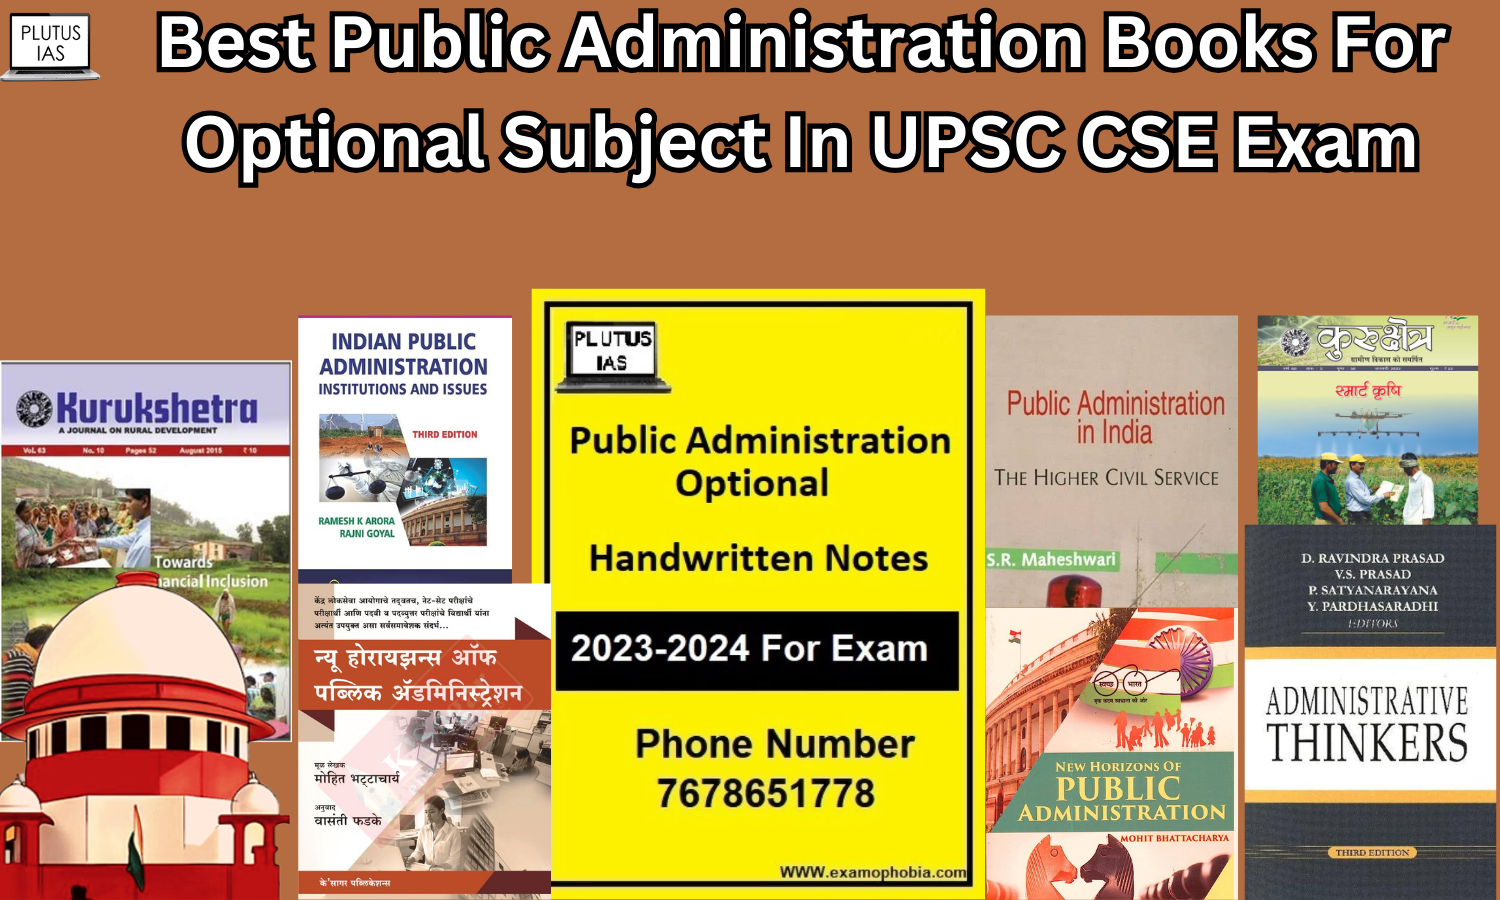 Public Administration optional books for UPSC